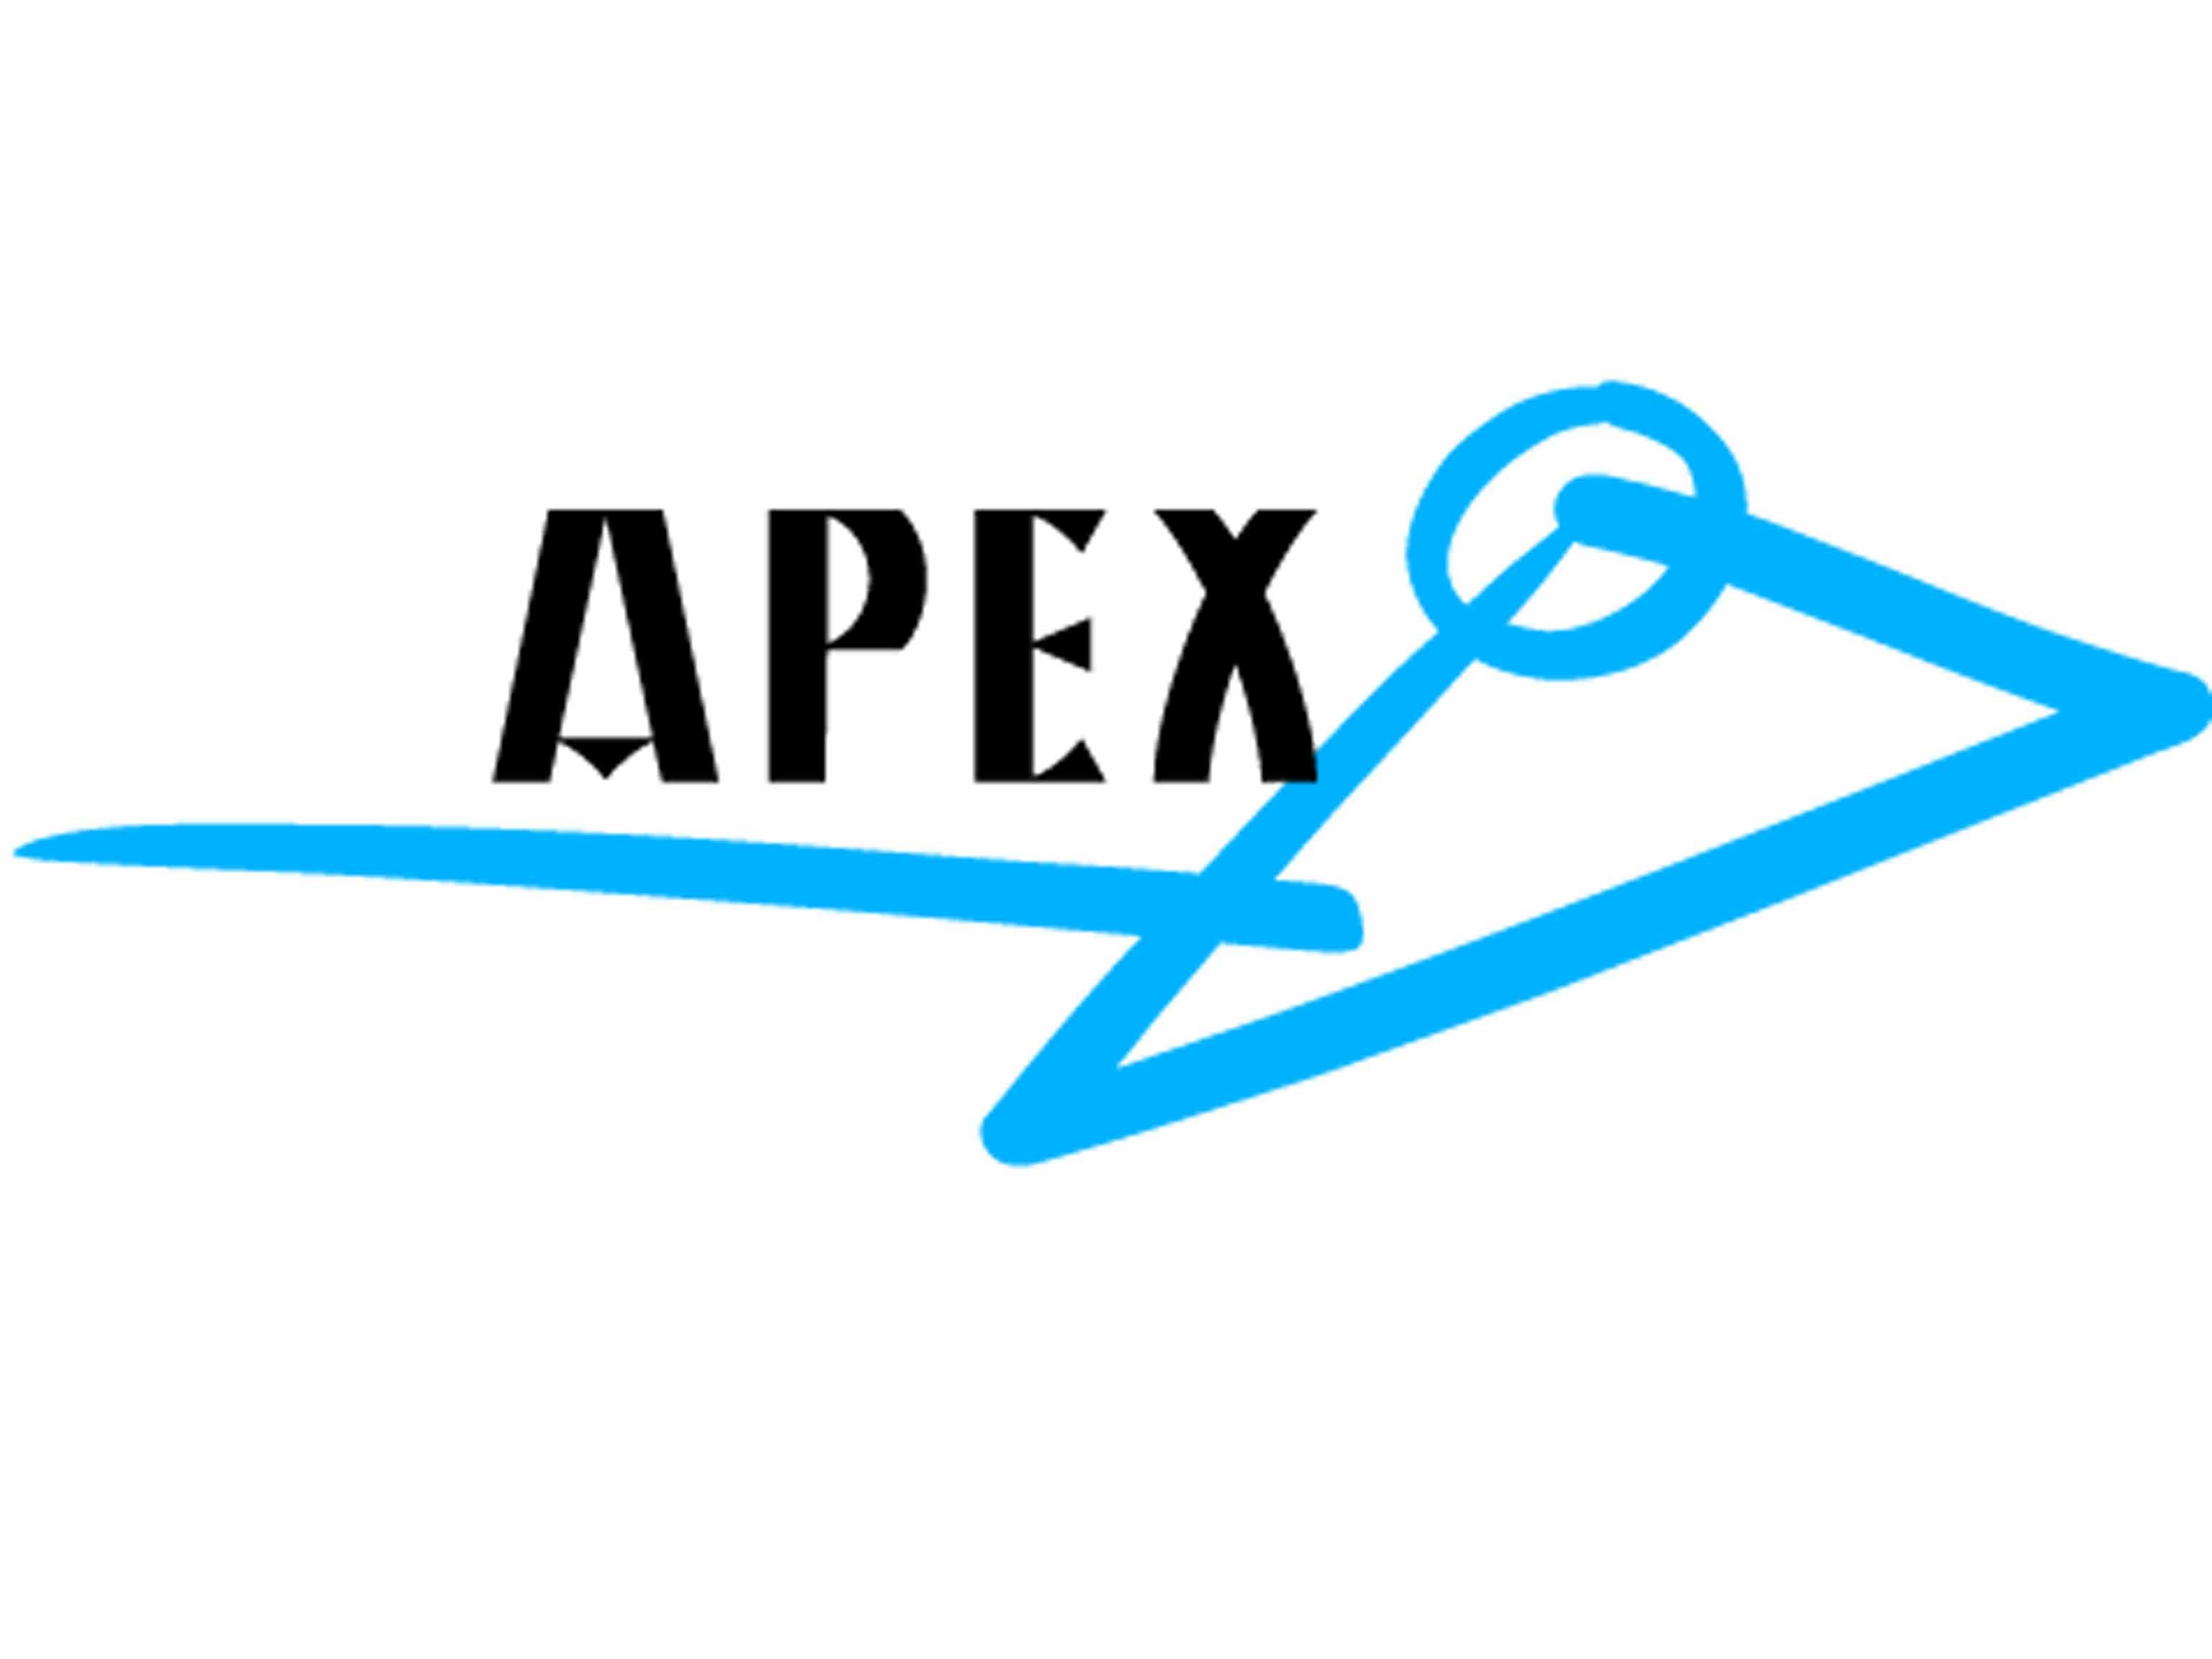 Apex Electronics